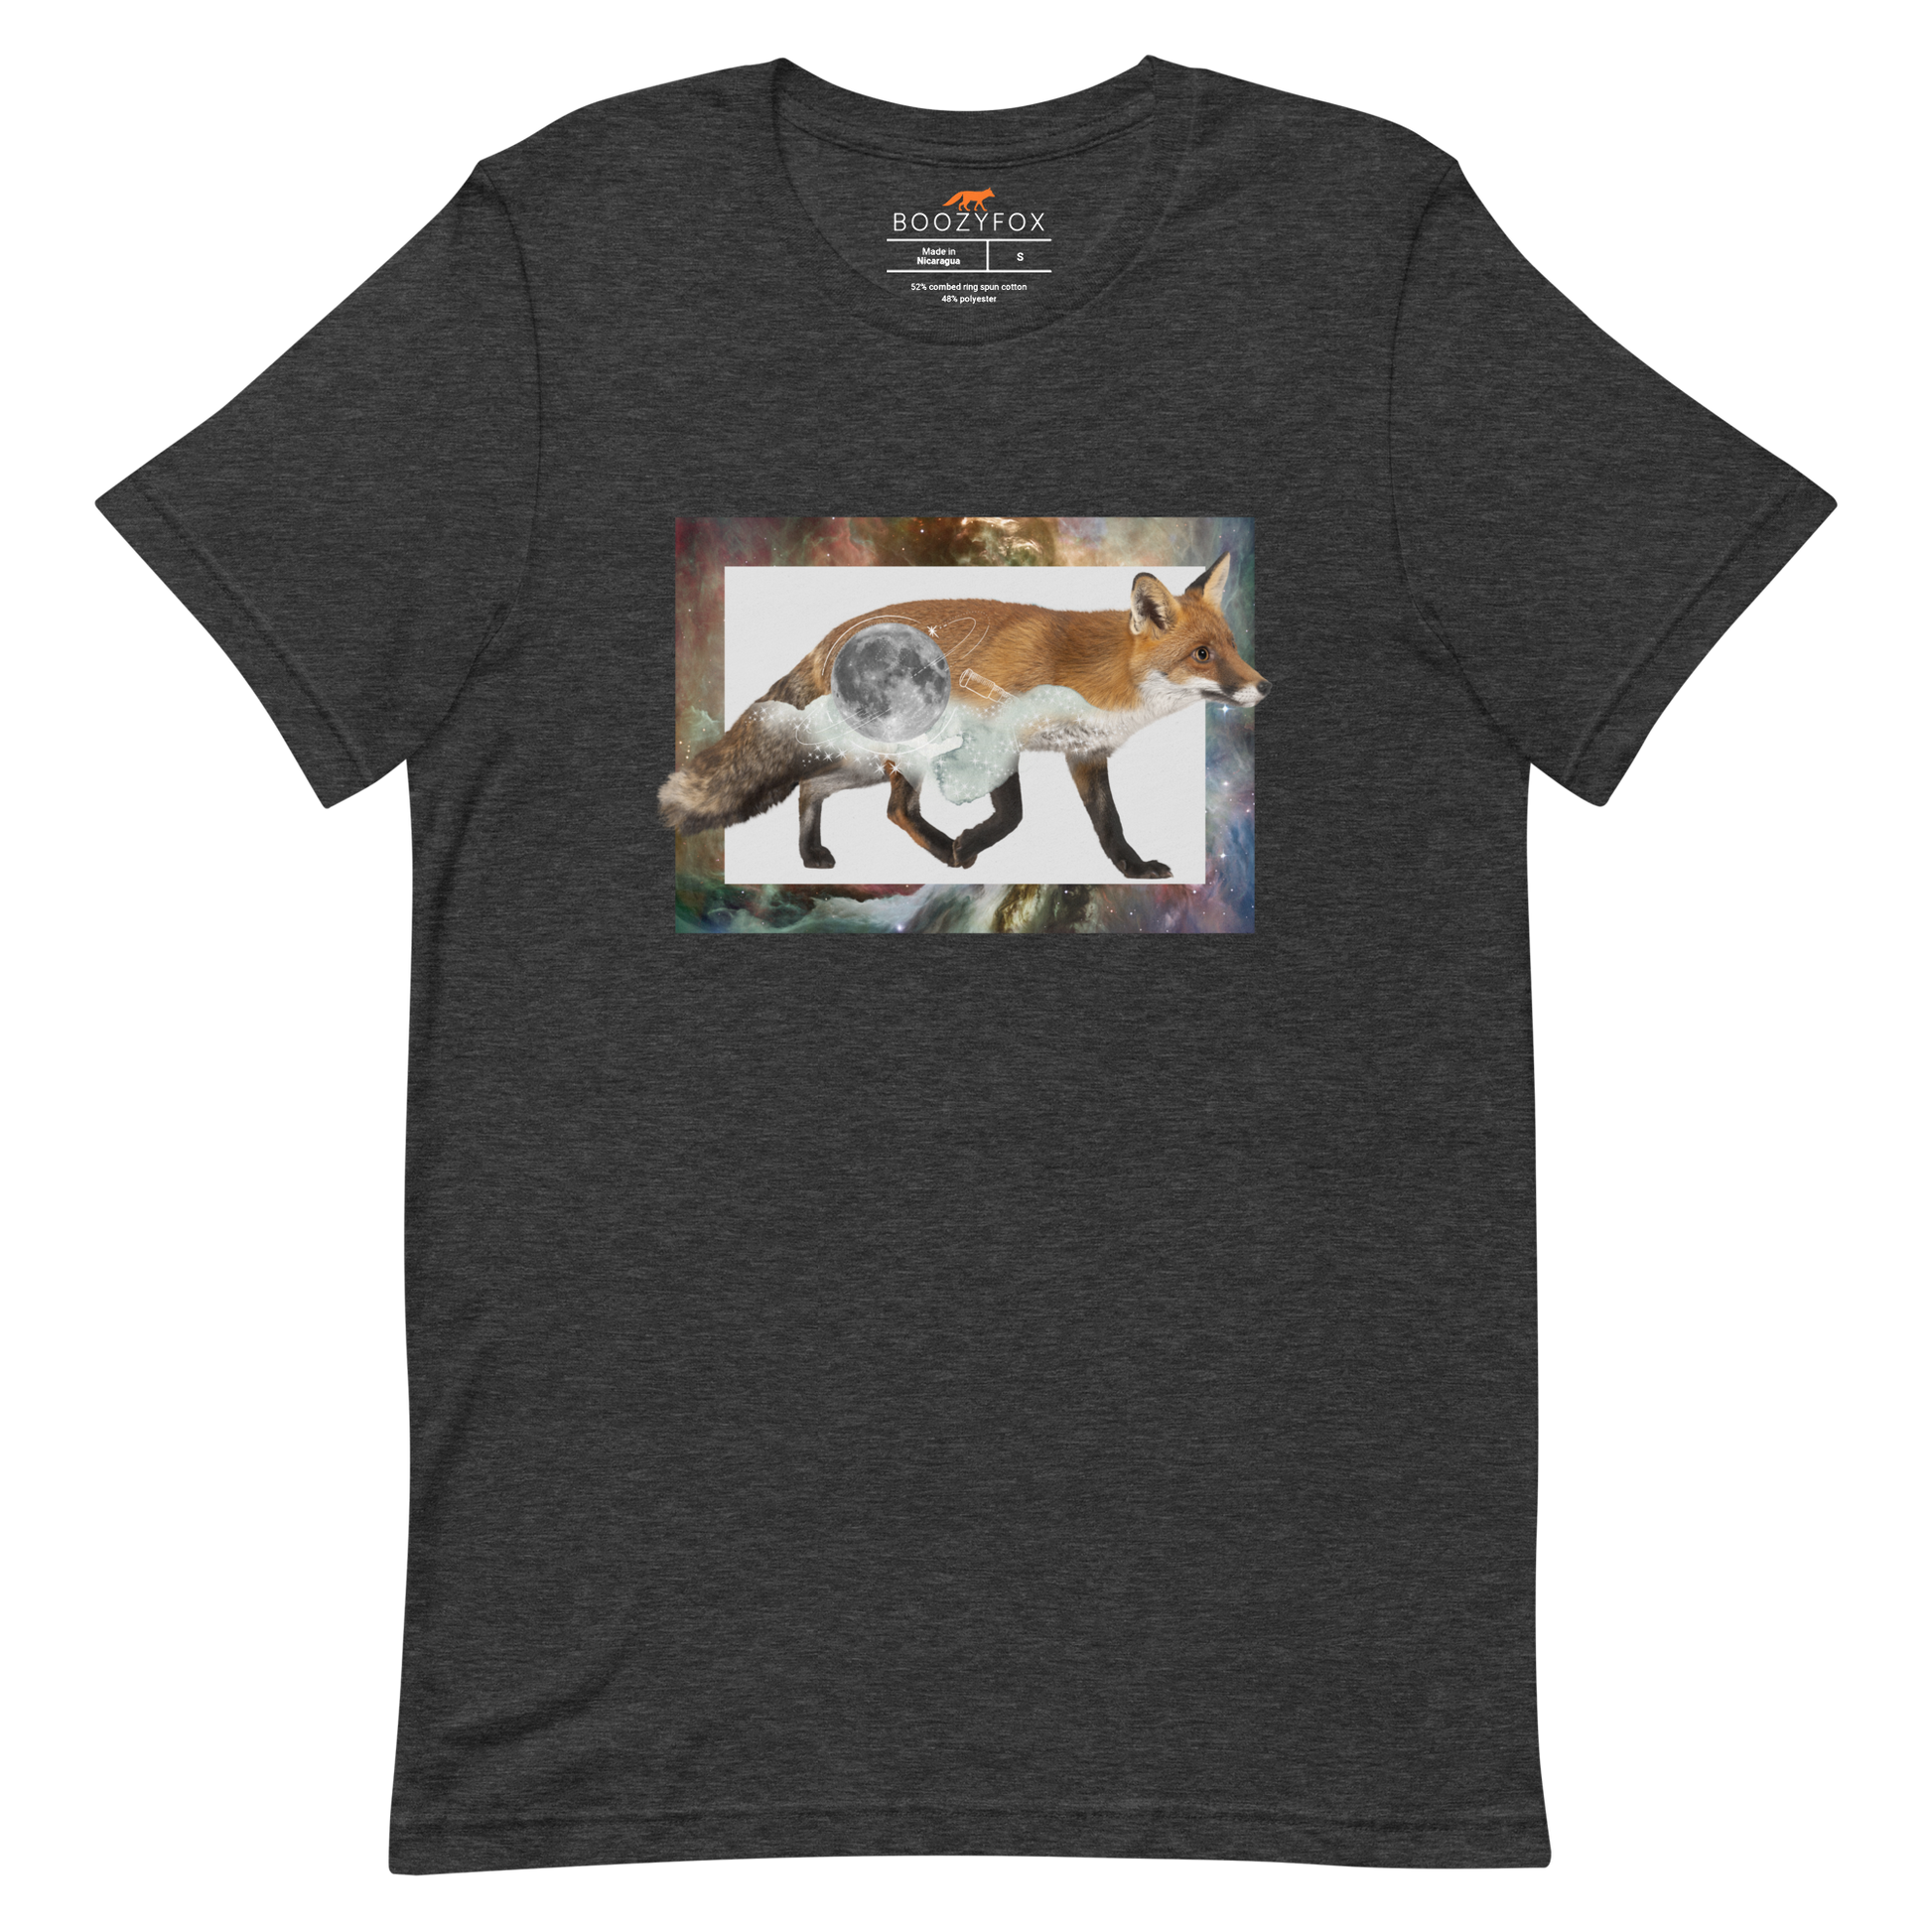 Dark Grey Heather Premium Fox T-Shirt featuring a stellar Space Fox graphic on the chest - Cool Graphic Fox Tees - Boozy Fox